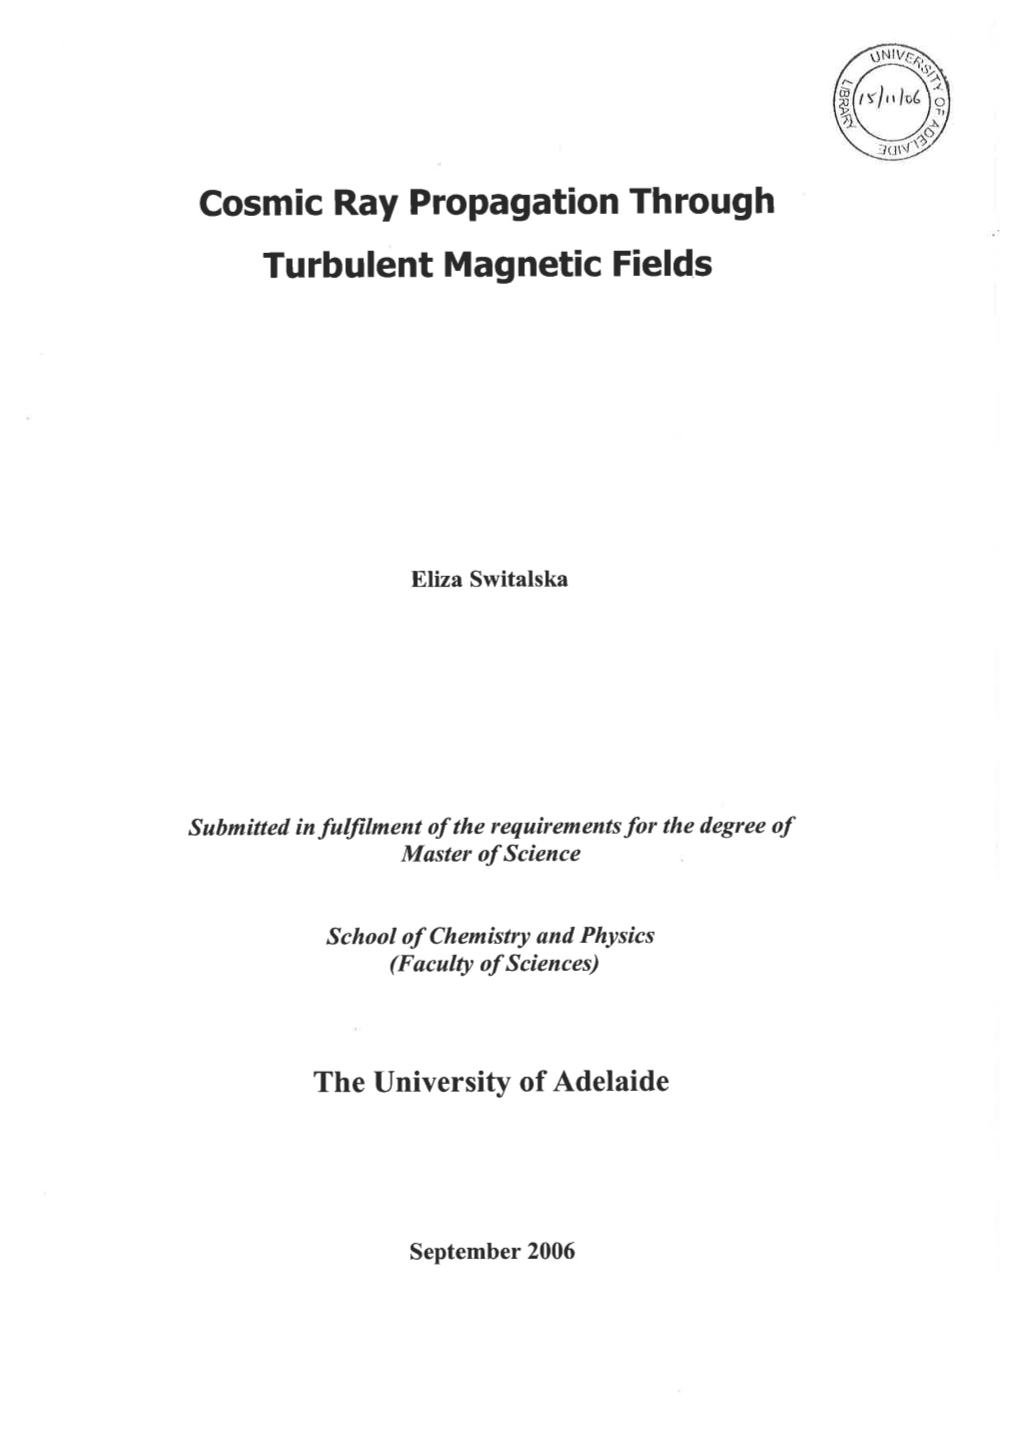 Cosmic Ray Propagation Through Turbulent Magnetic Fields